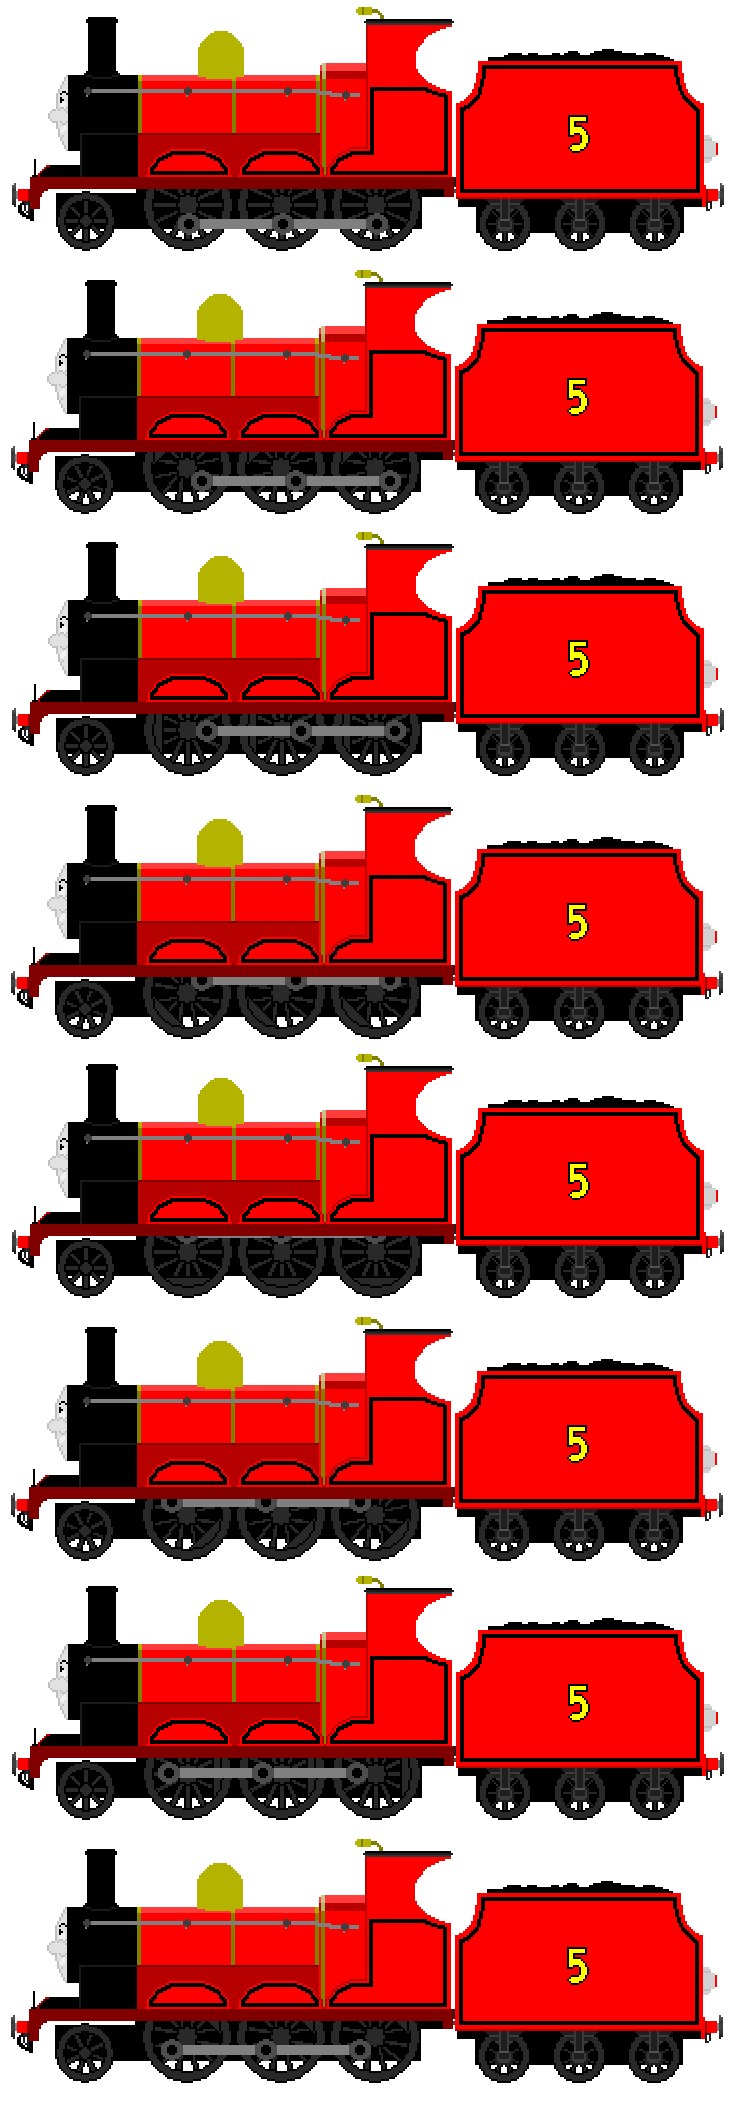 RWS #4 - James the Red Engine by FizzledFirebox on DeviantArt